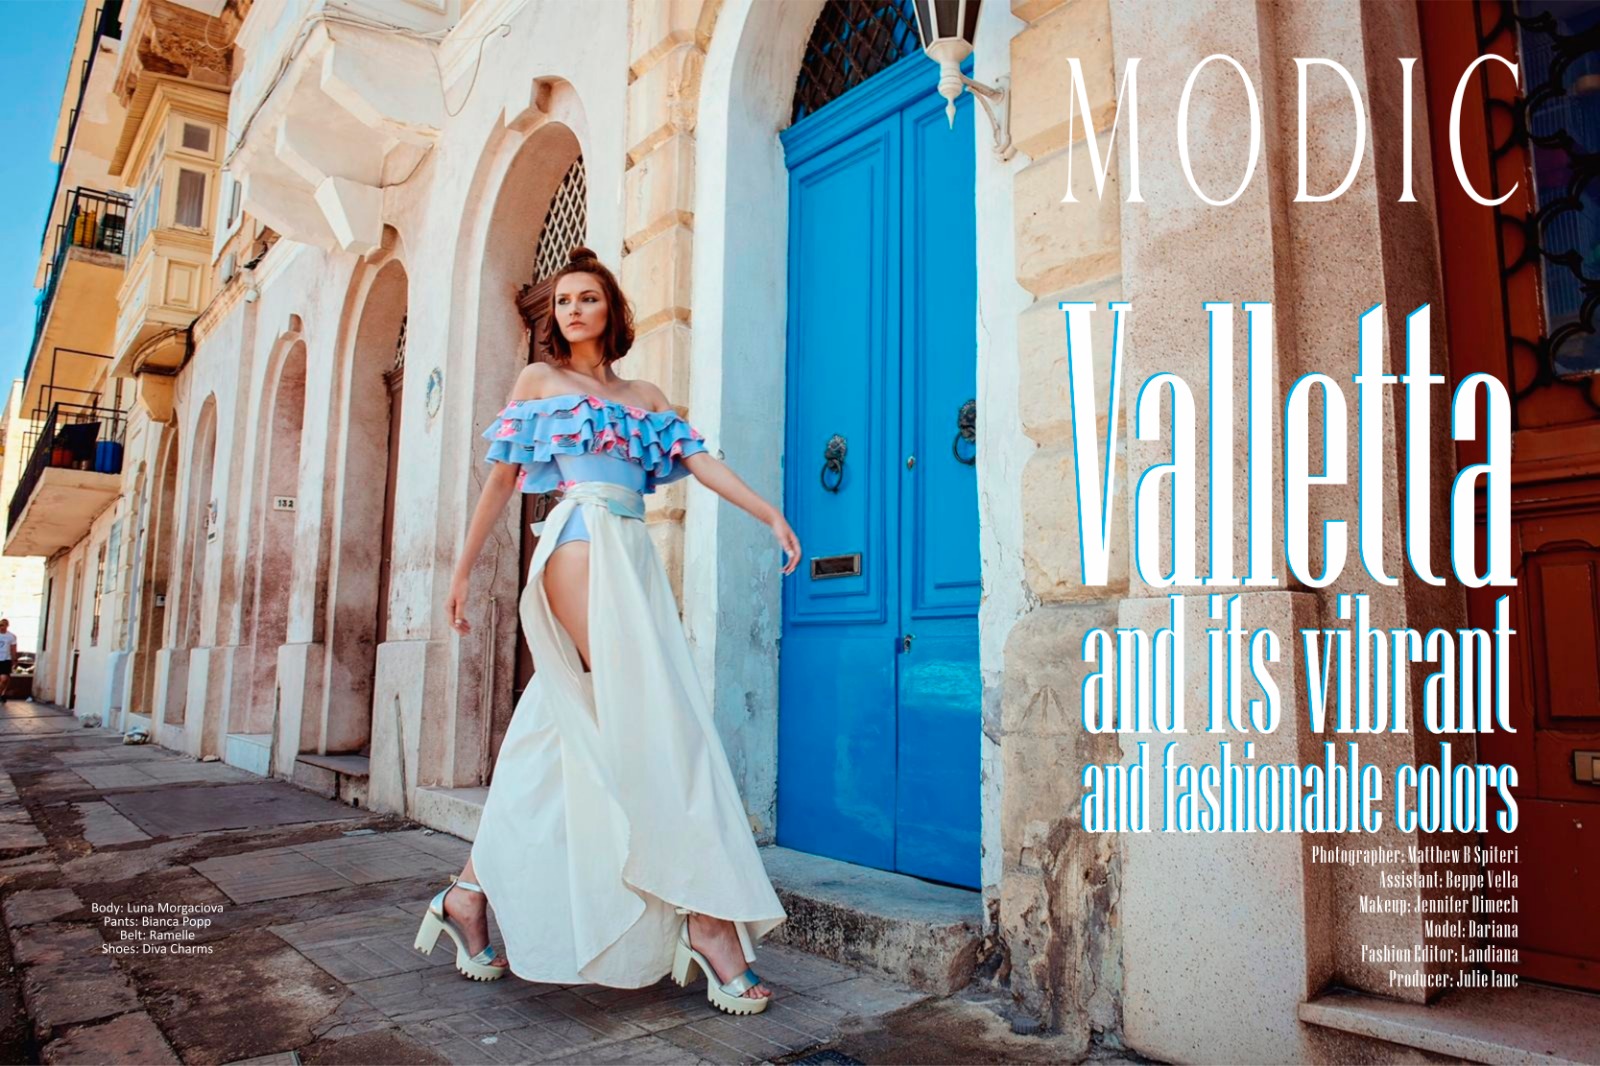 Modic Fashion Editorial: Valletta and its vibrant & fashionable colors